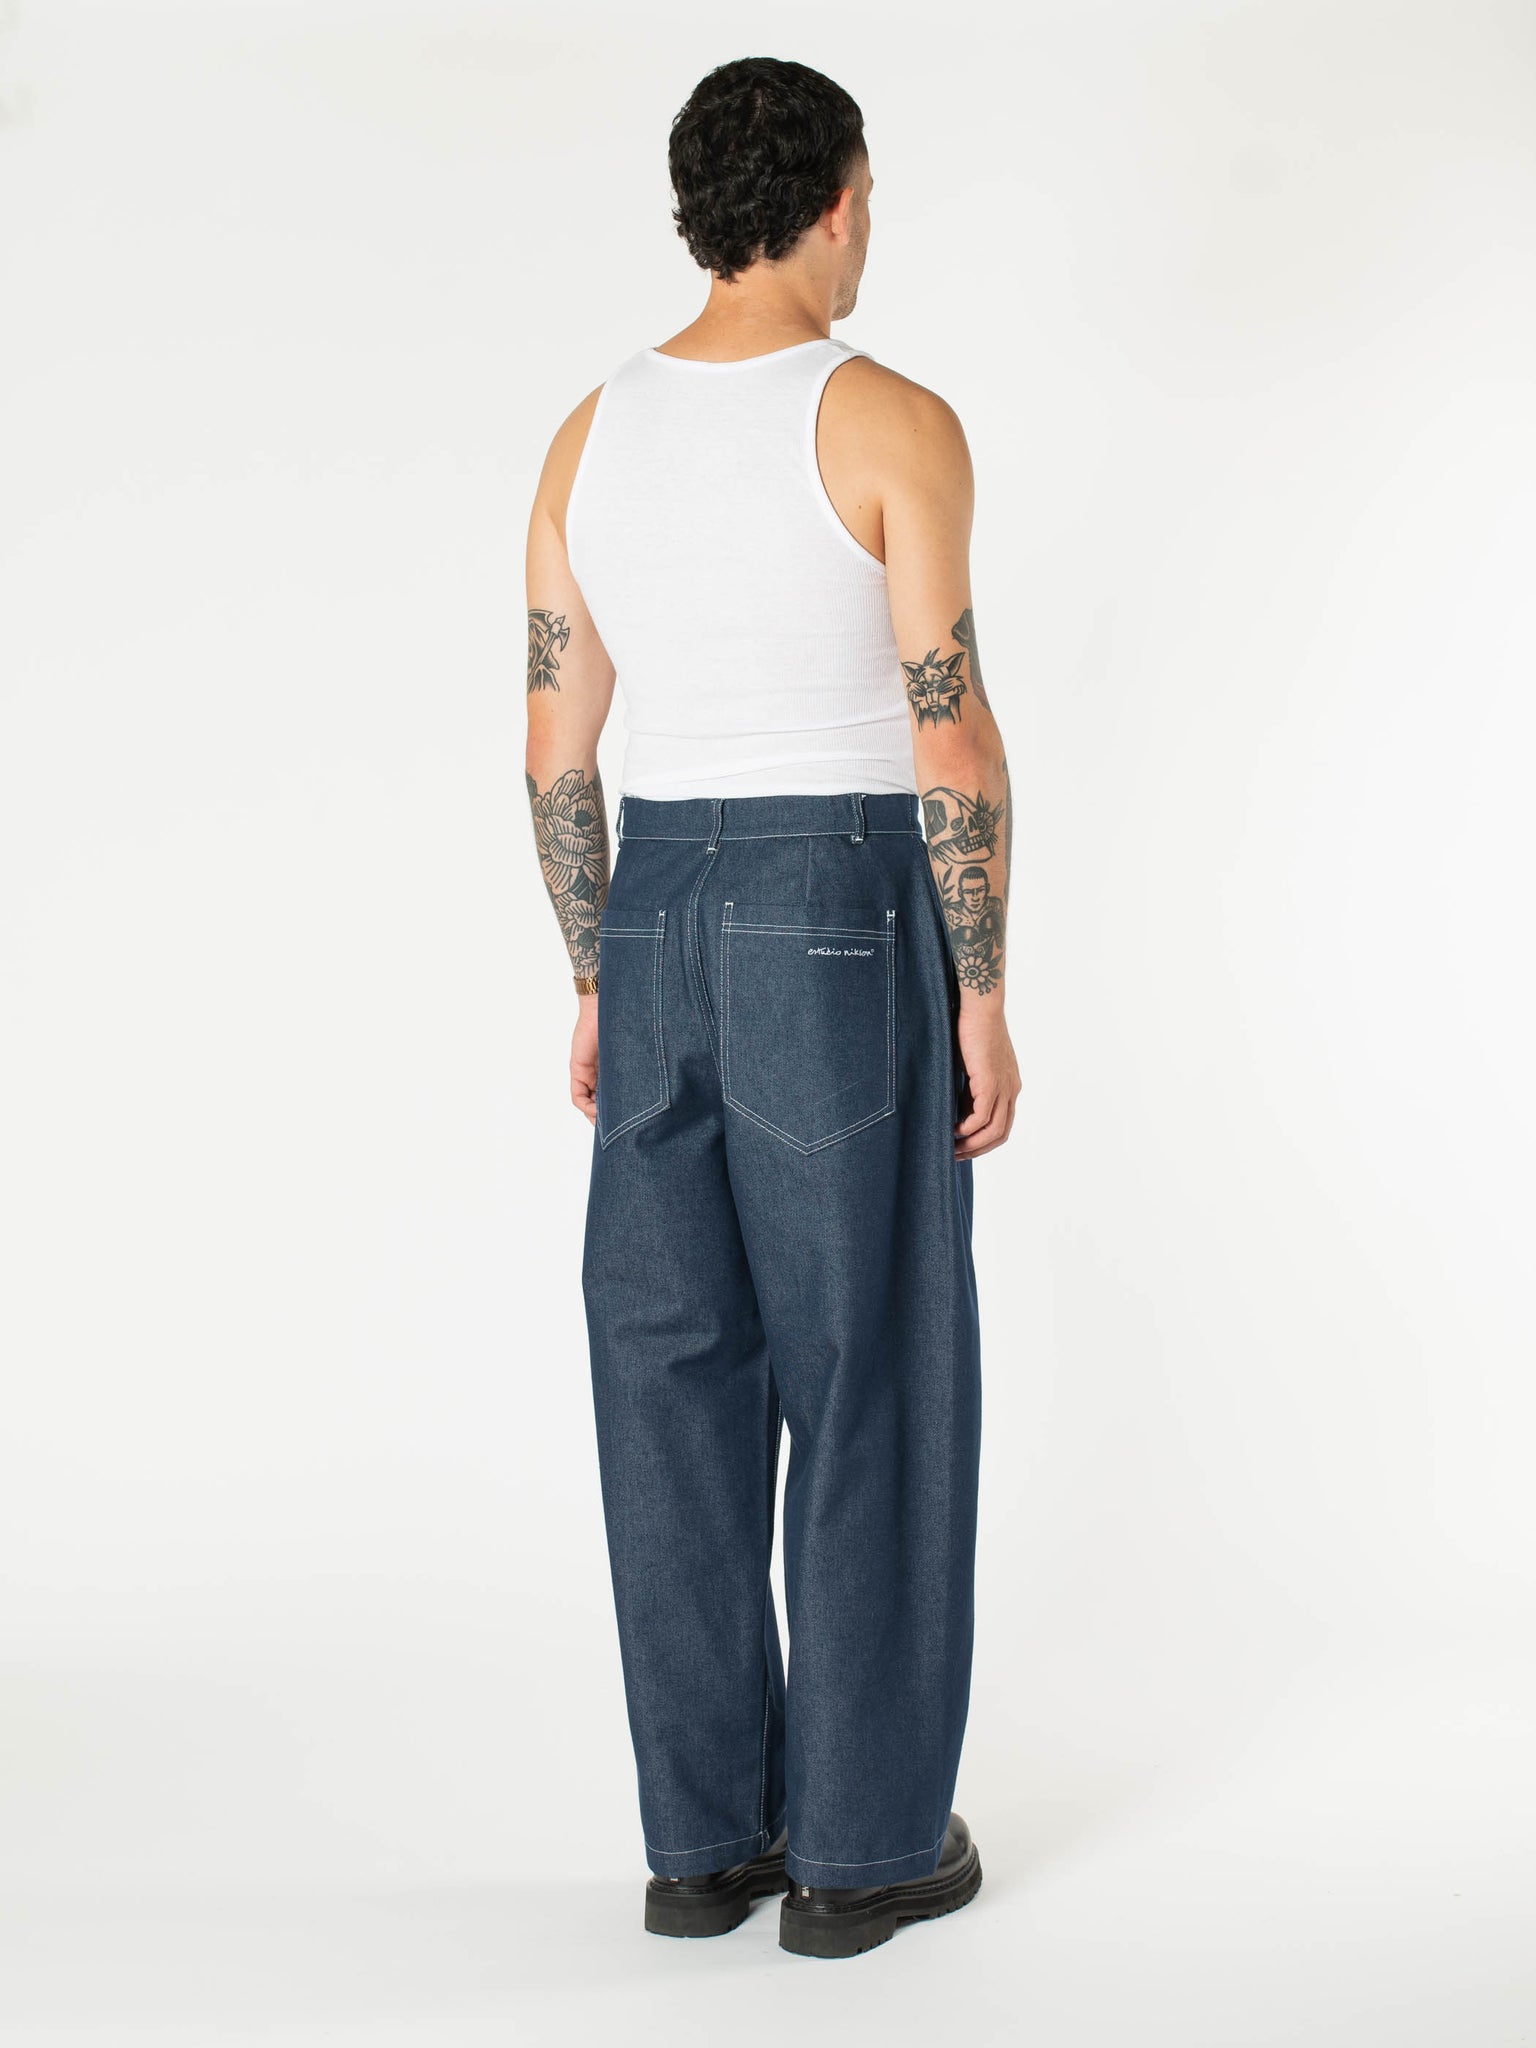 Raw Denim In-stitch Jeans [white stitch]